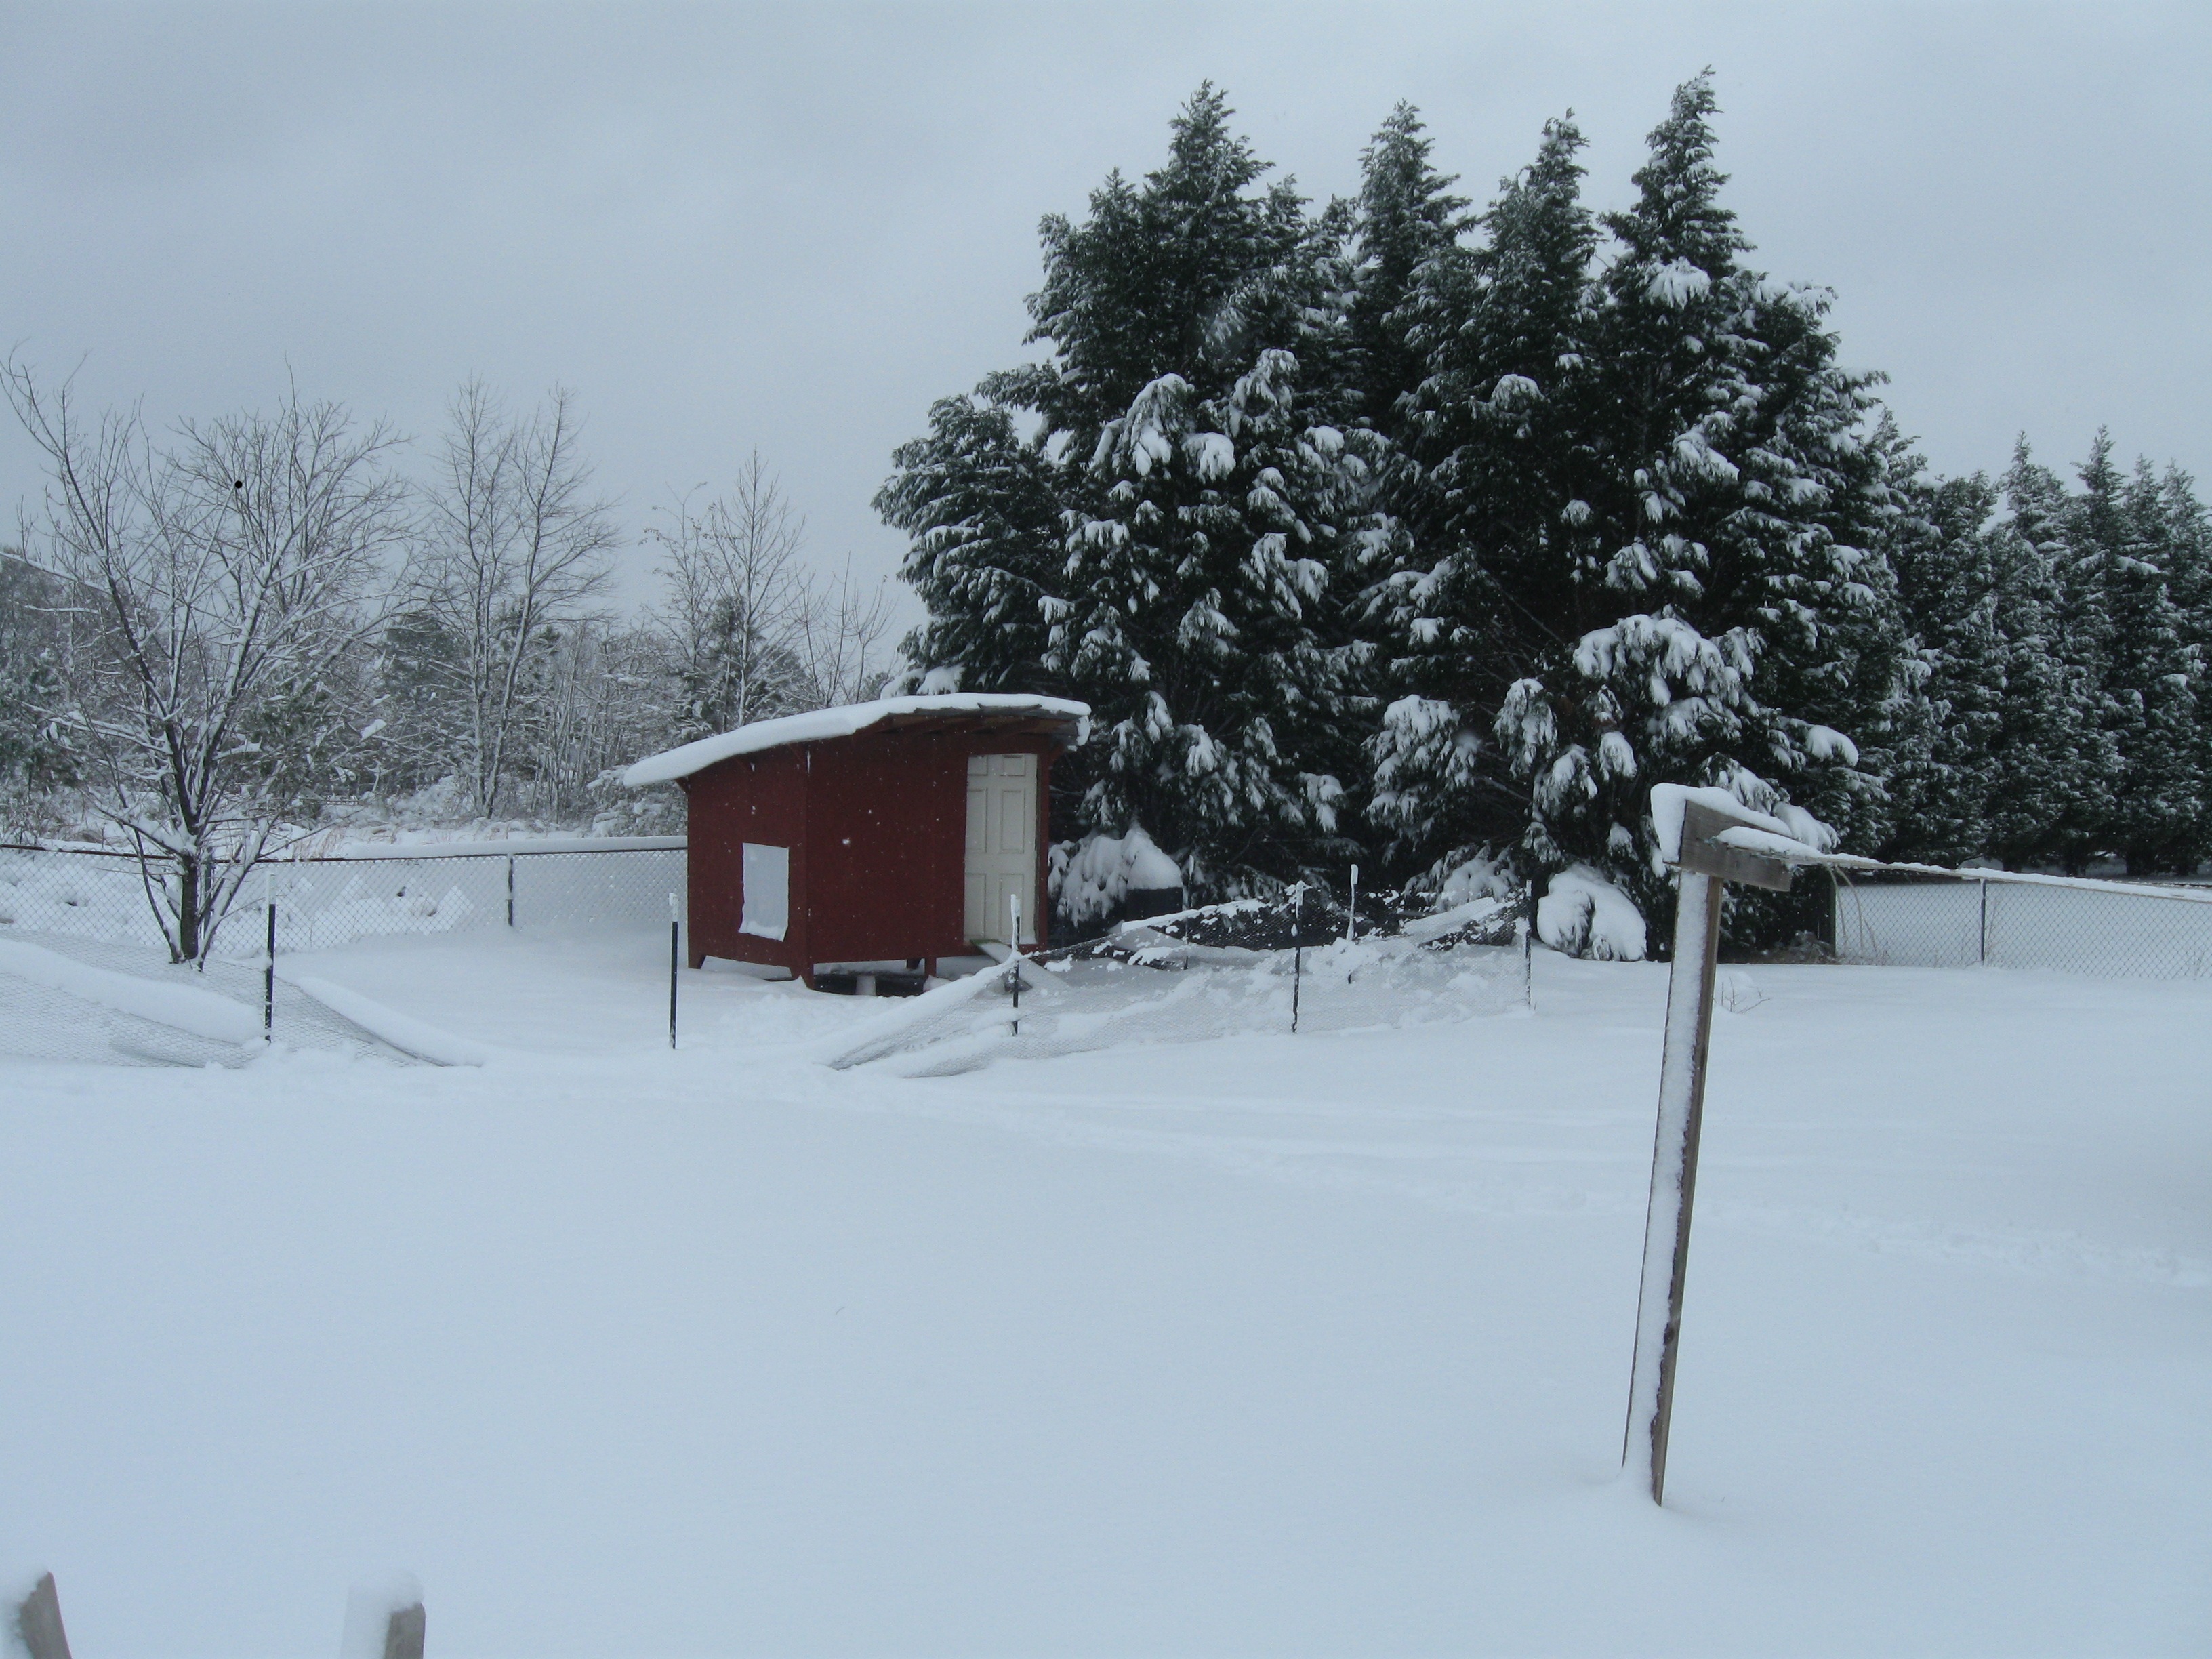 Snowy Landscape scene like Tennessee Christmas